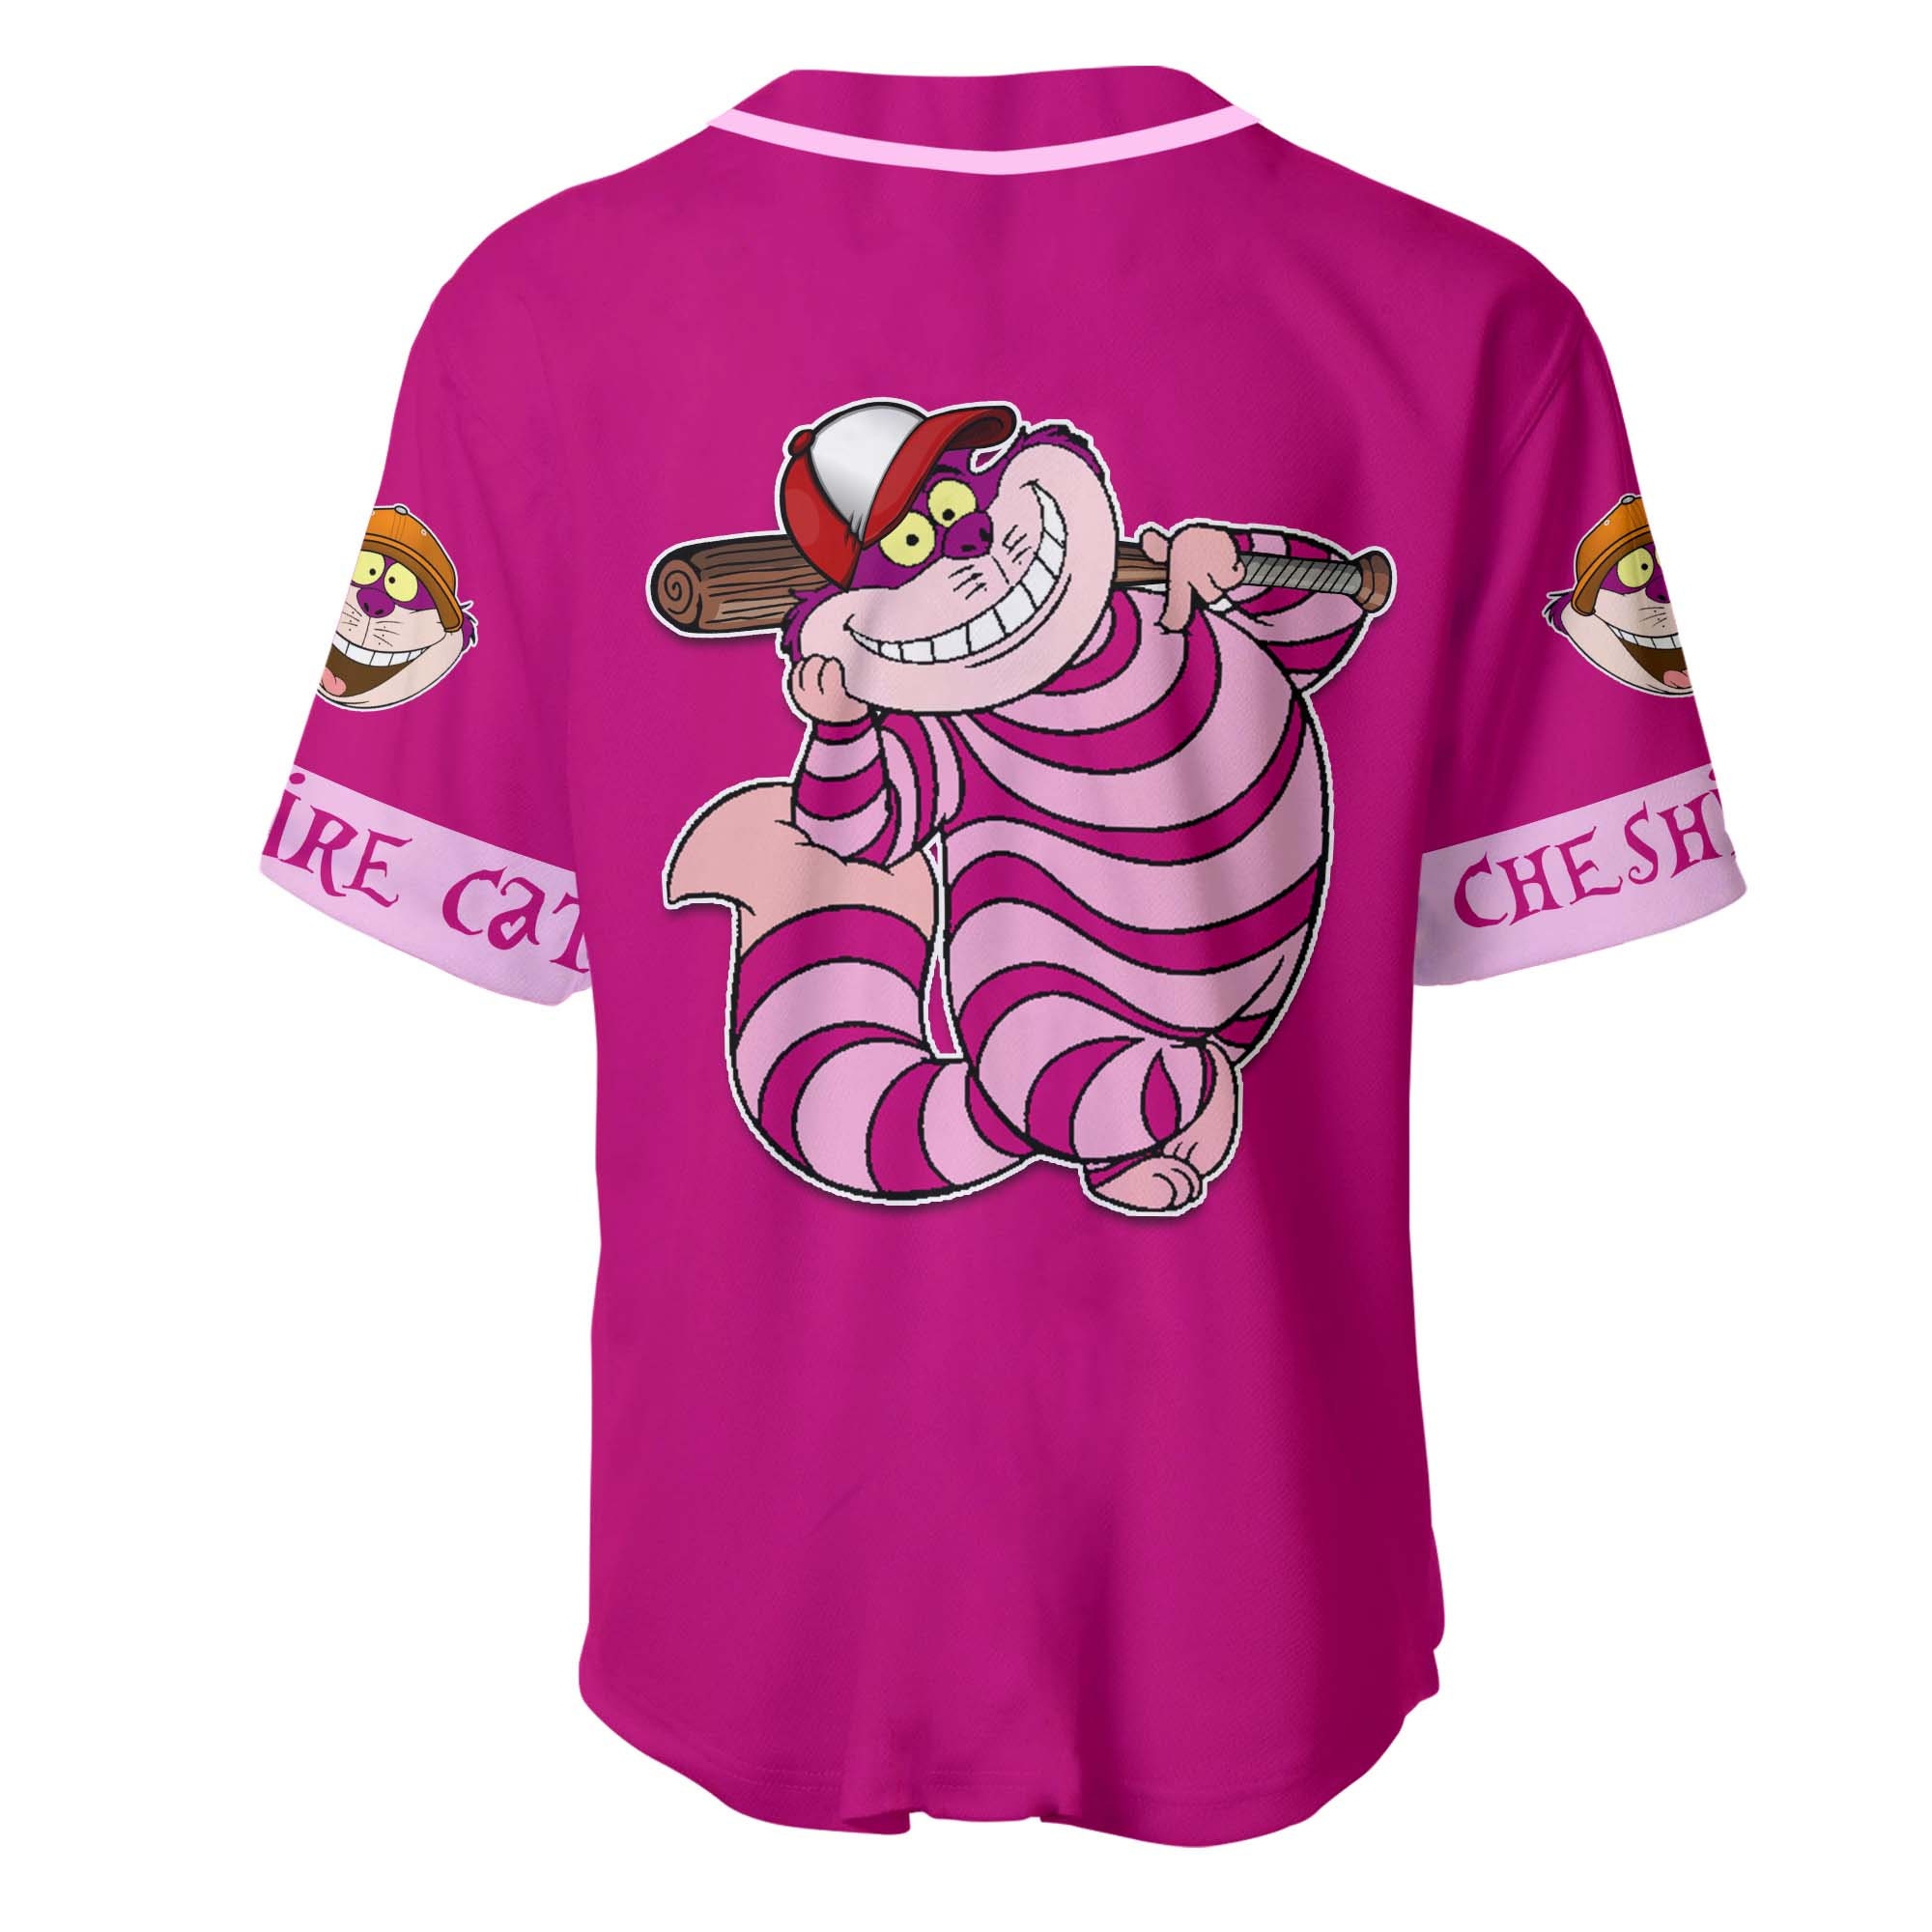 Rocket Raccoon Space Galaxy Custom Name Baseball Jersey Shirt Outfit Cute  Gifts For Fans Disney - Banantees